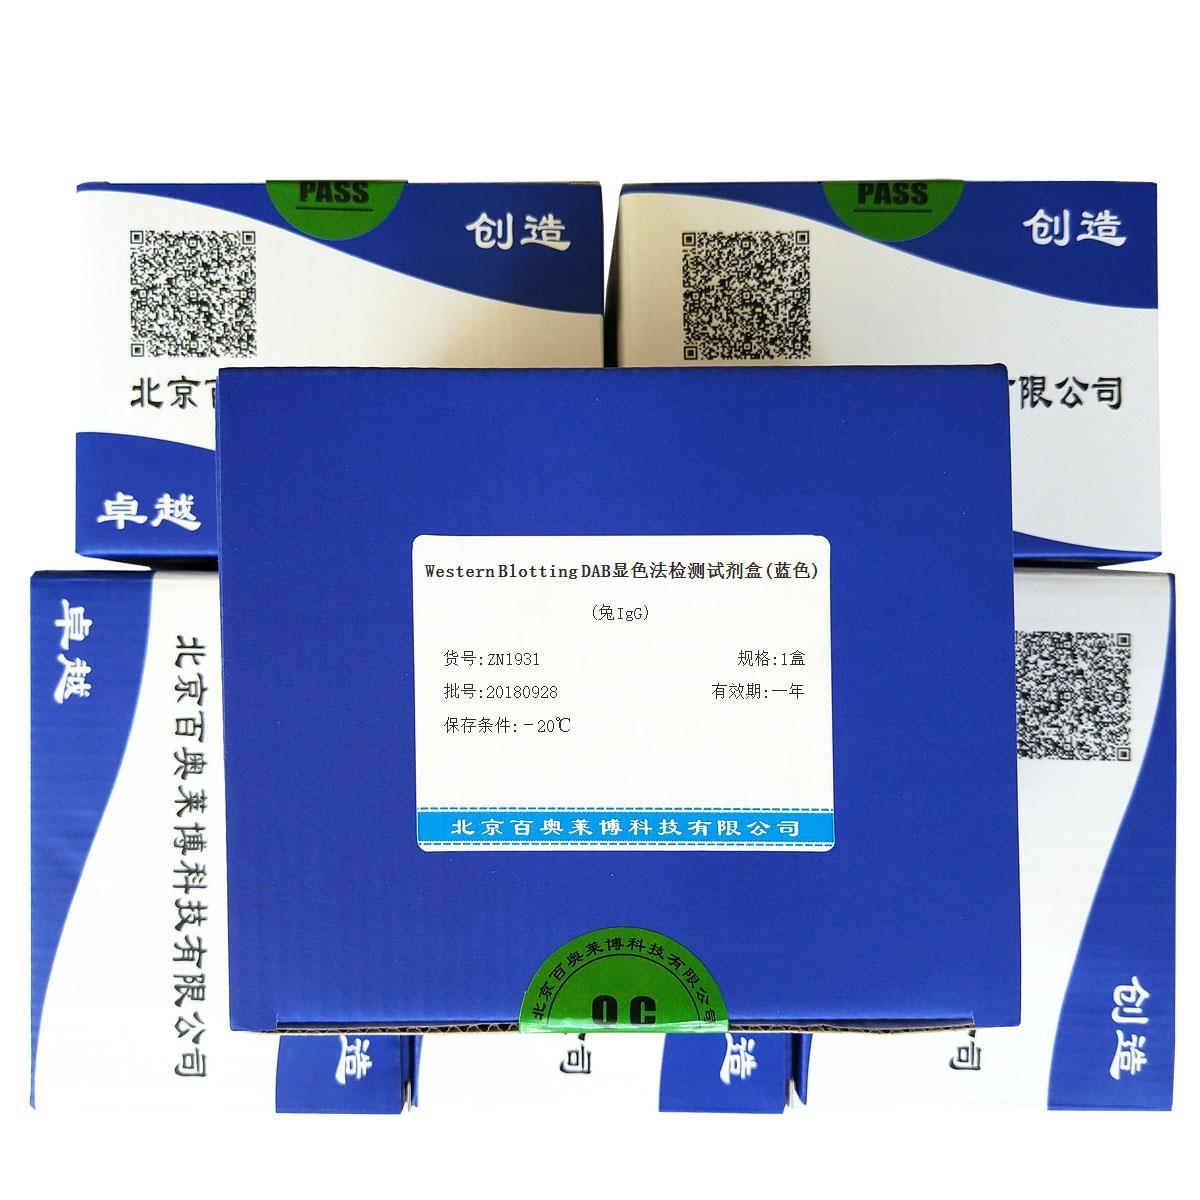 Western Blotting DAB显色法检测试剂盒(蓝色)(兔IgG)